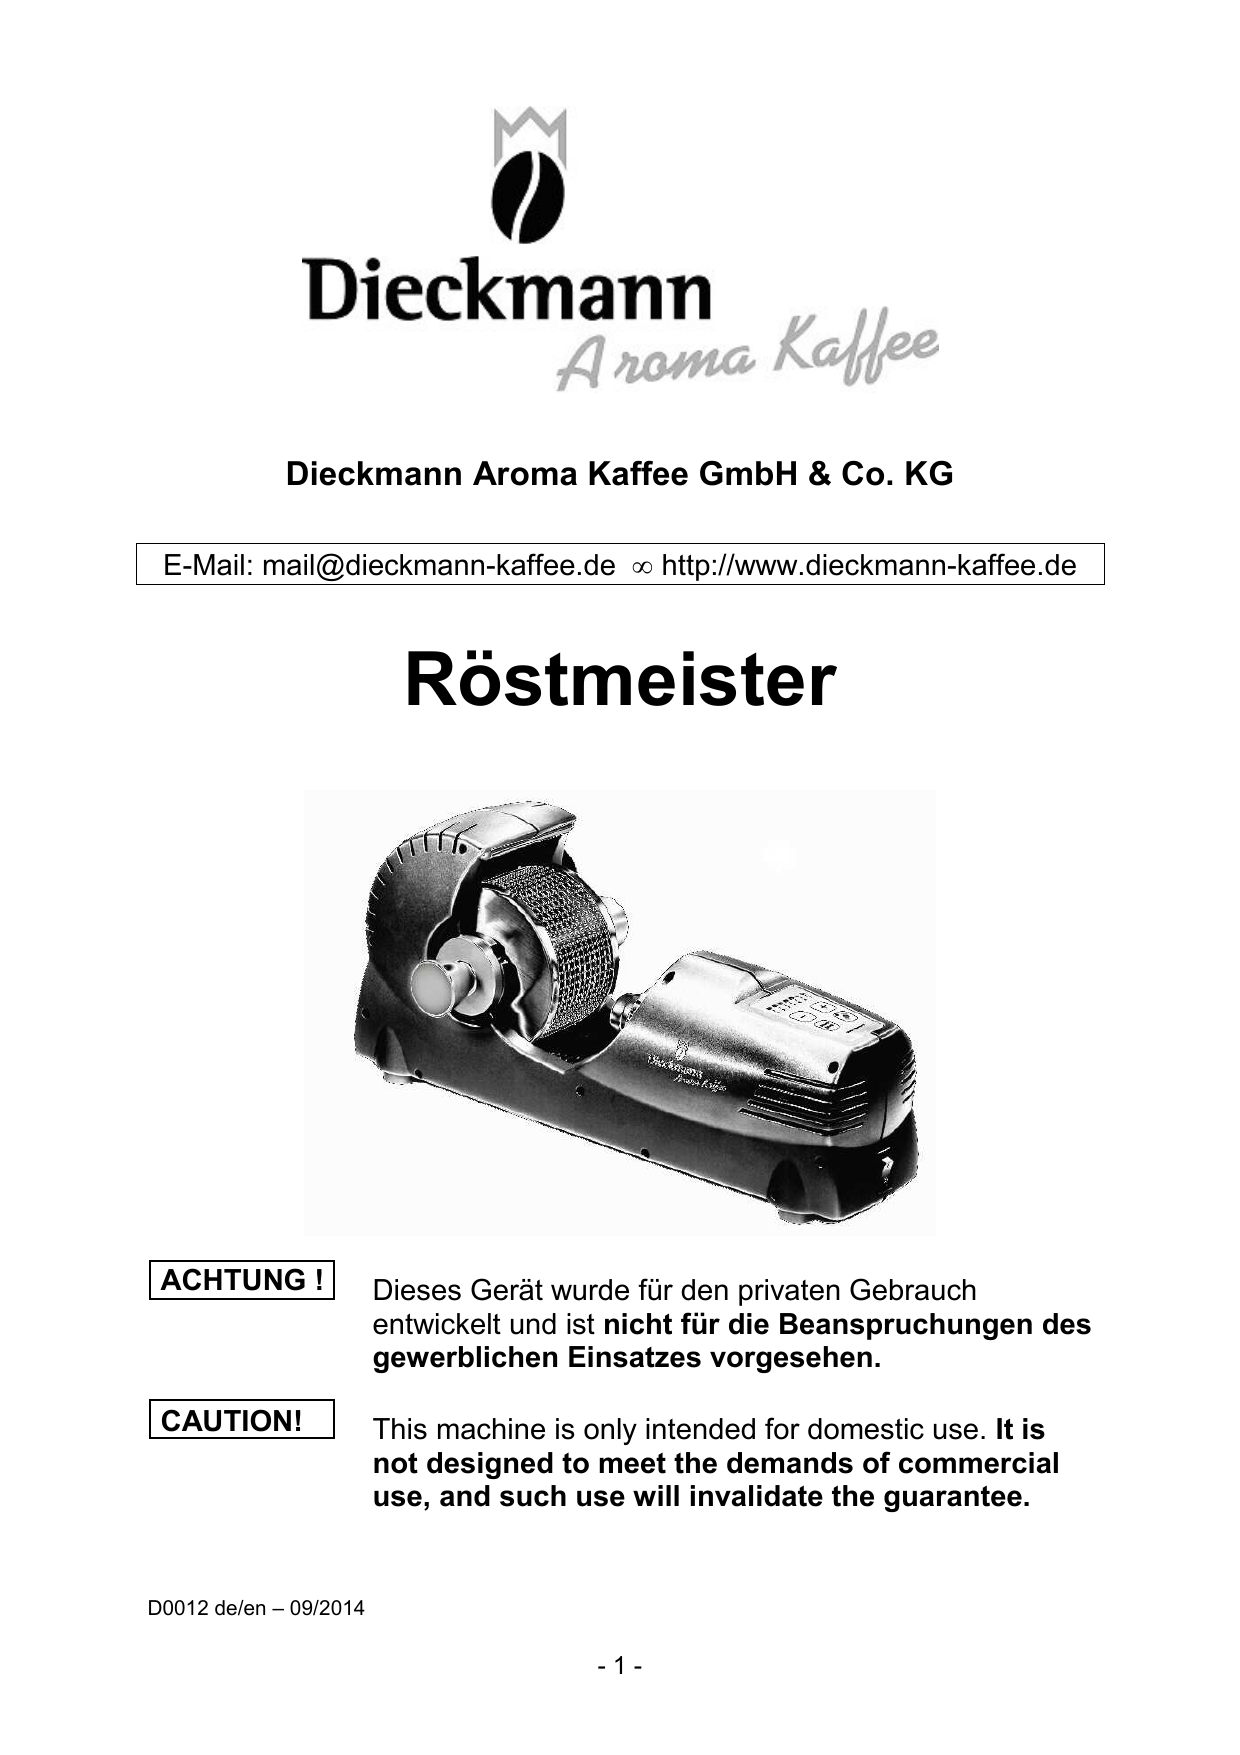 Coffee machines  Dieckmann Aroma Kaffee